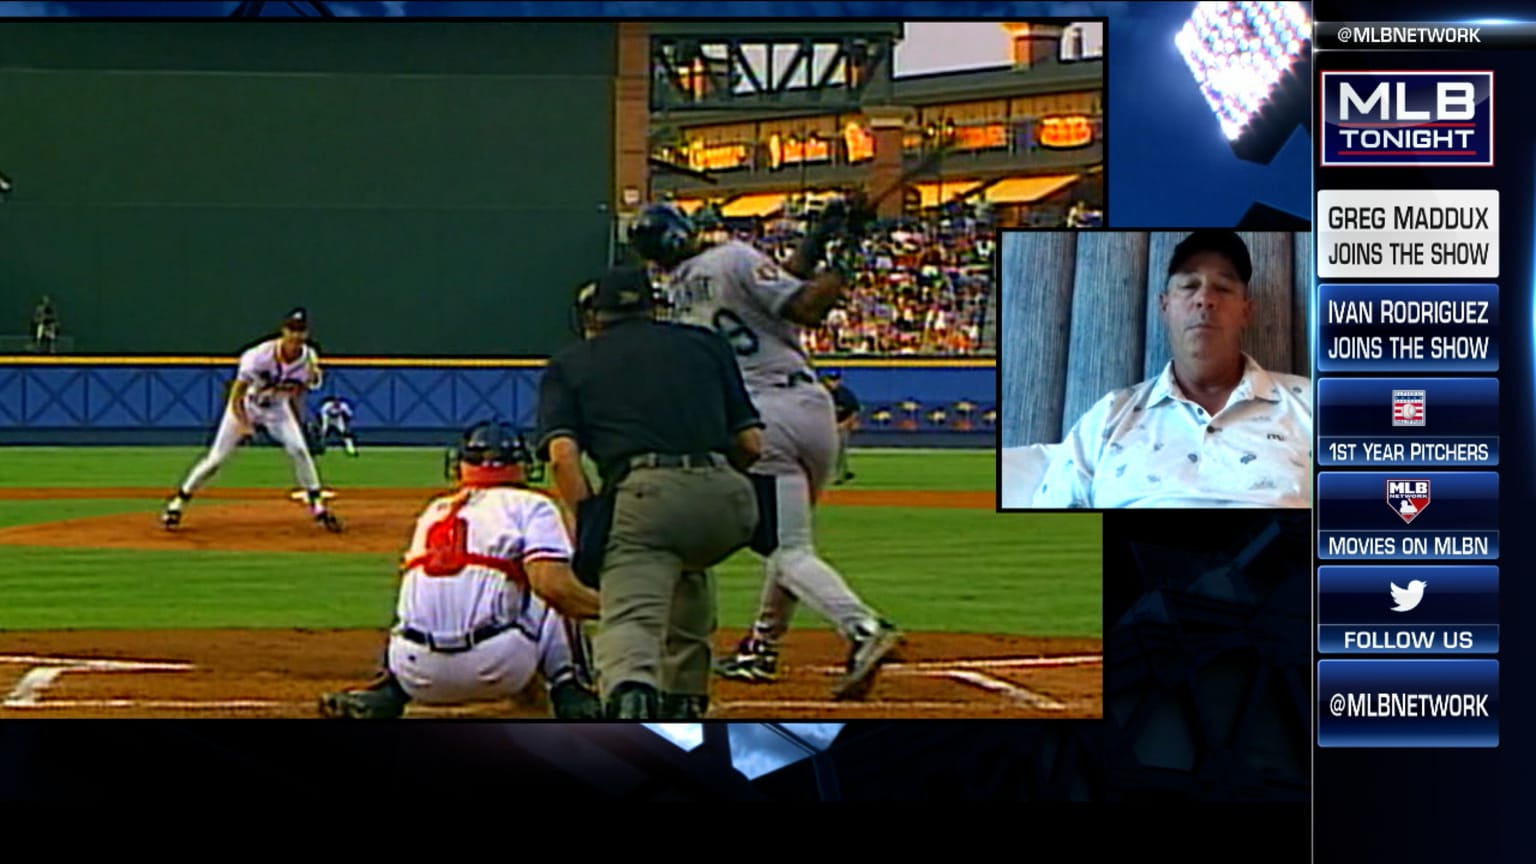 Baseball legend Greg Maddux to help lead MLB opening day